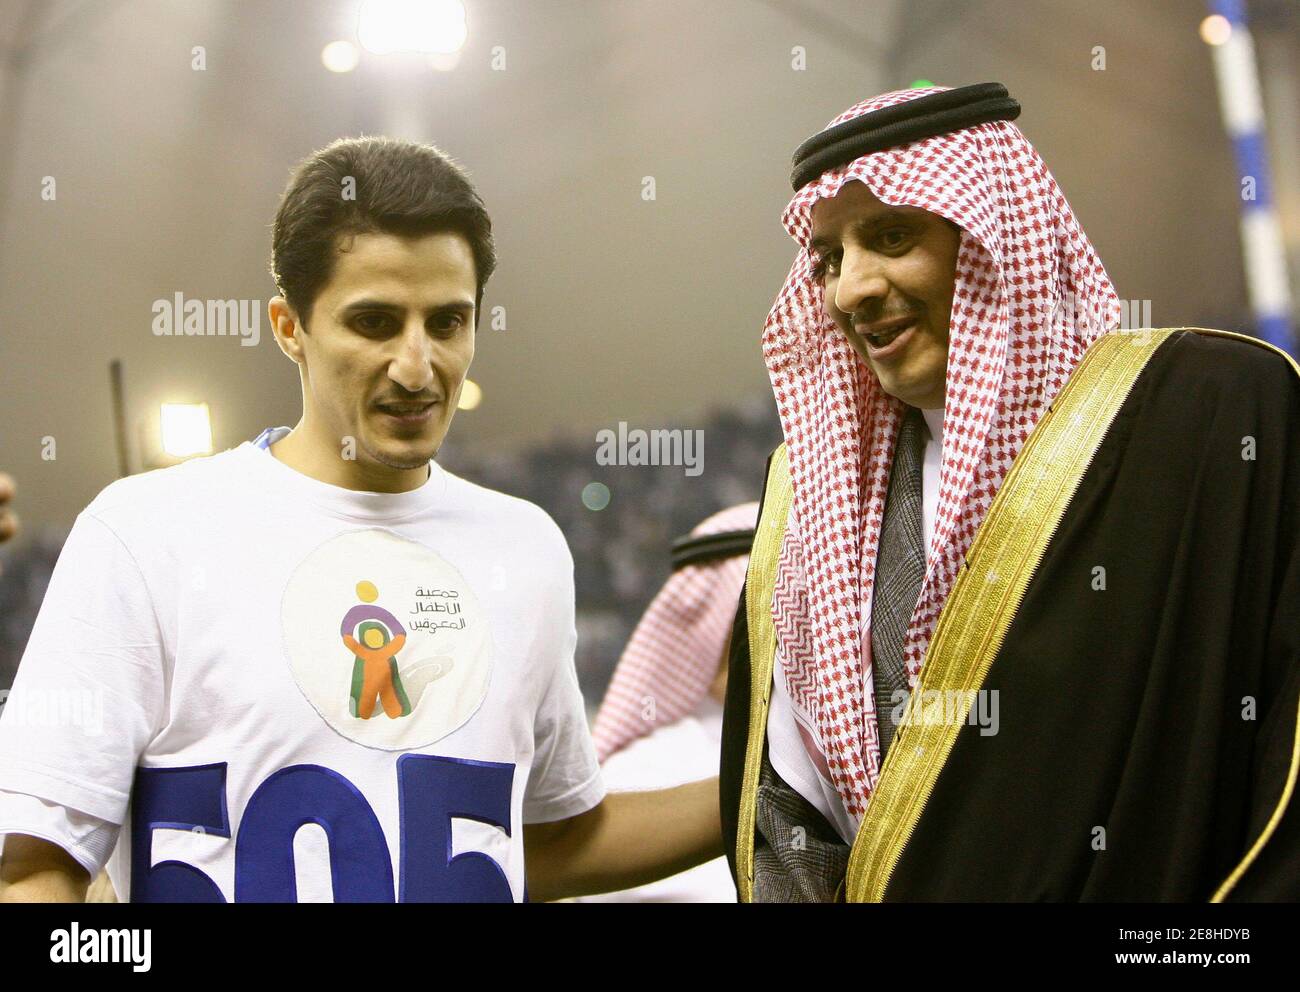 Saudi Prince Sultan Bin Fahad (R) greets Saudi Arabian club Al Hilal's Nawaf Al-Temyat before the match with Inter Milan in Riyadh Januray 2, 2010. Inter Milan are in Riyadh to play against Saudi club Al Hilal in a testimonial match for veteran Saudi soccer player Nawaf Al-Temyat.  REUTERS/Fahad Shadeed    (SAUDI ARABIA - Tags: SPORT SOCCER) Stock Photo